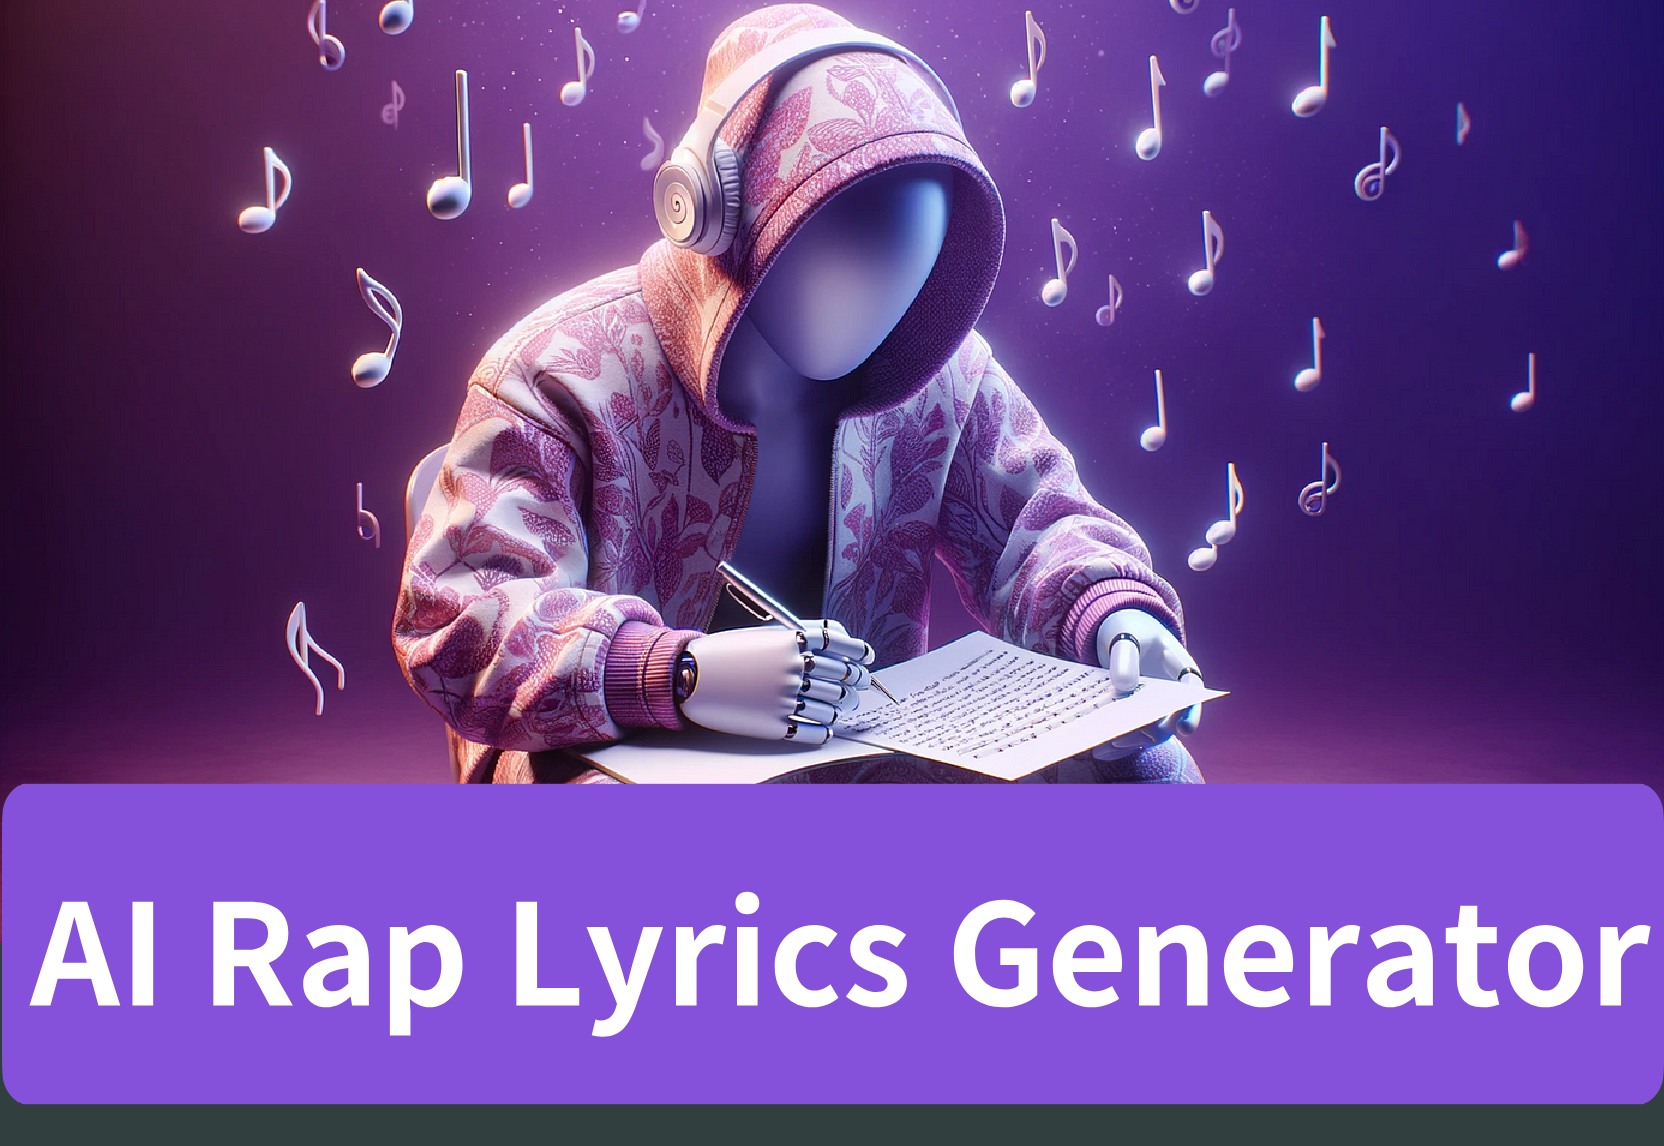 Ultimate Rap Generator: AI-Powered Lyrics Creation Tool